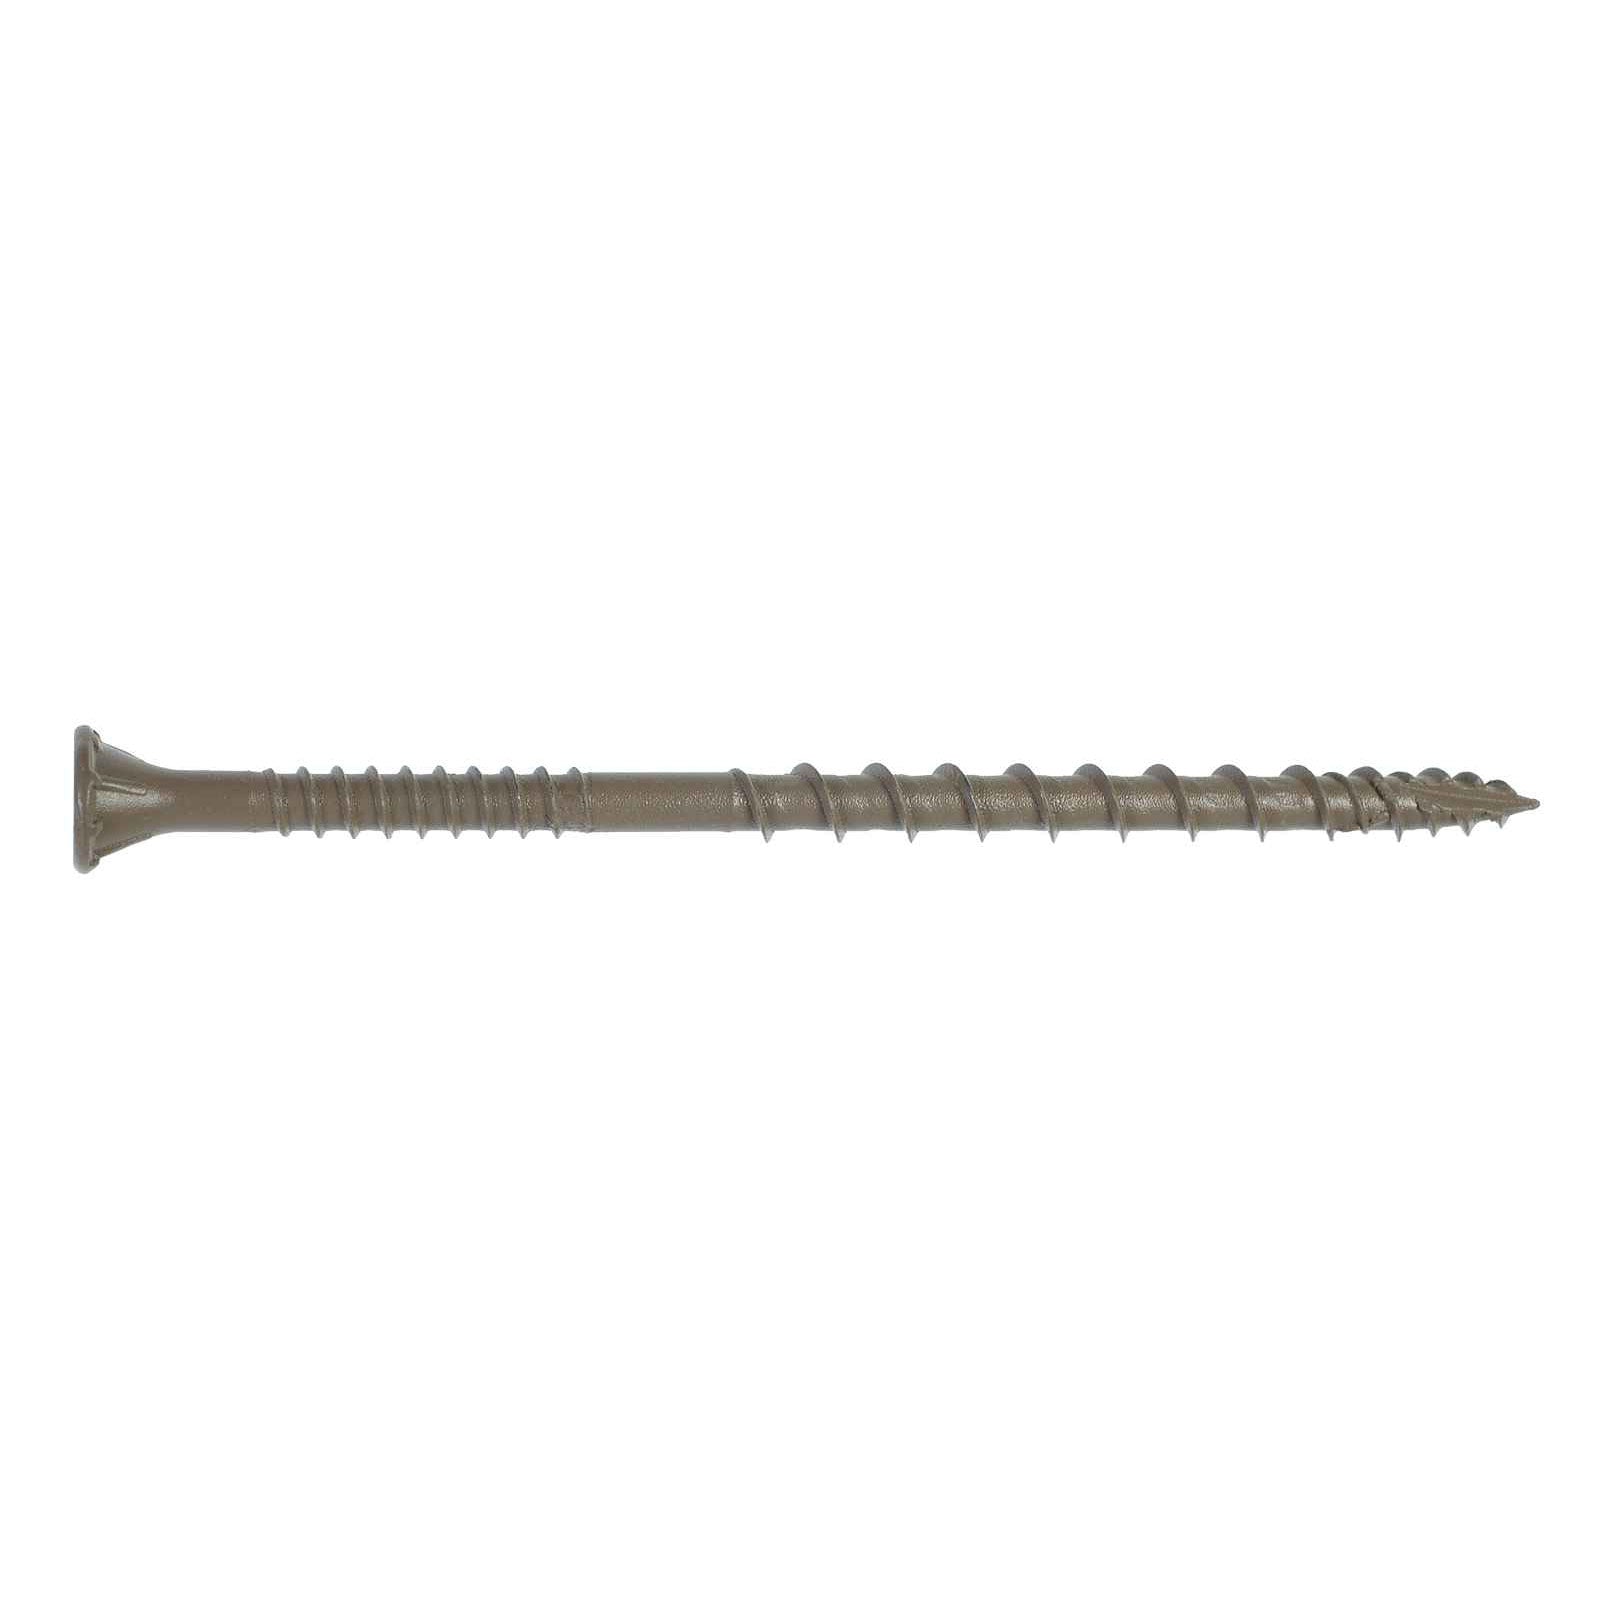 Brown Treated Wood Screws - Bugle Head Type - #8 x 1 1/2 - 500/Pkg